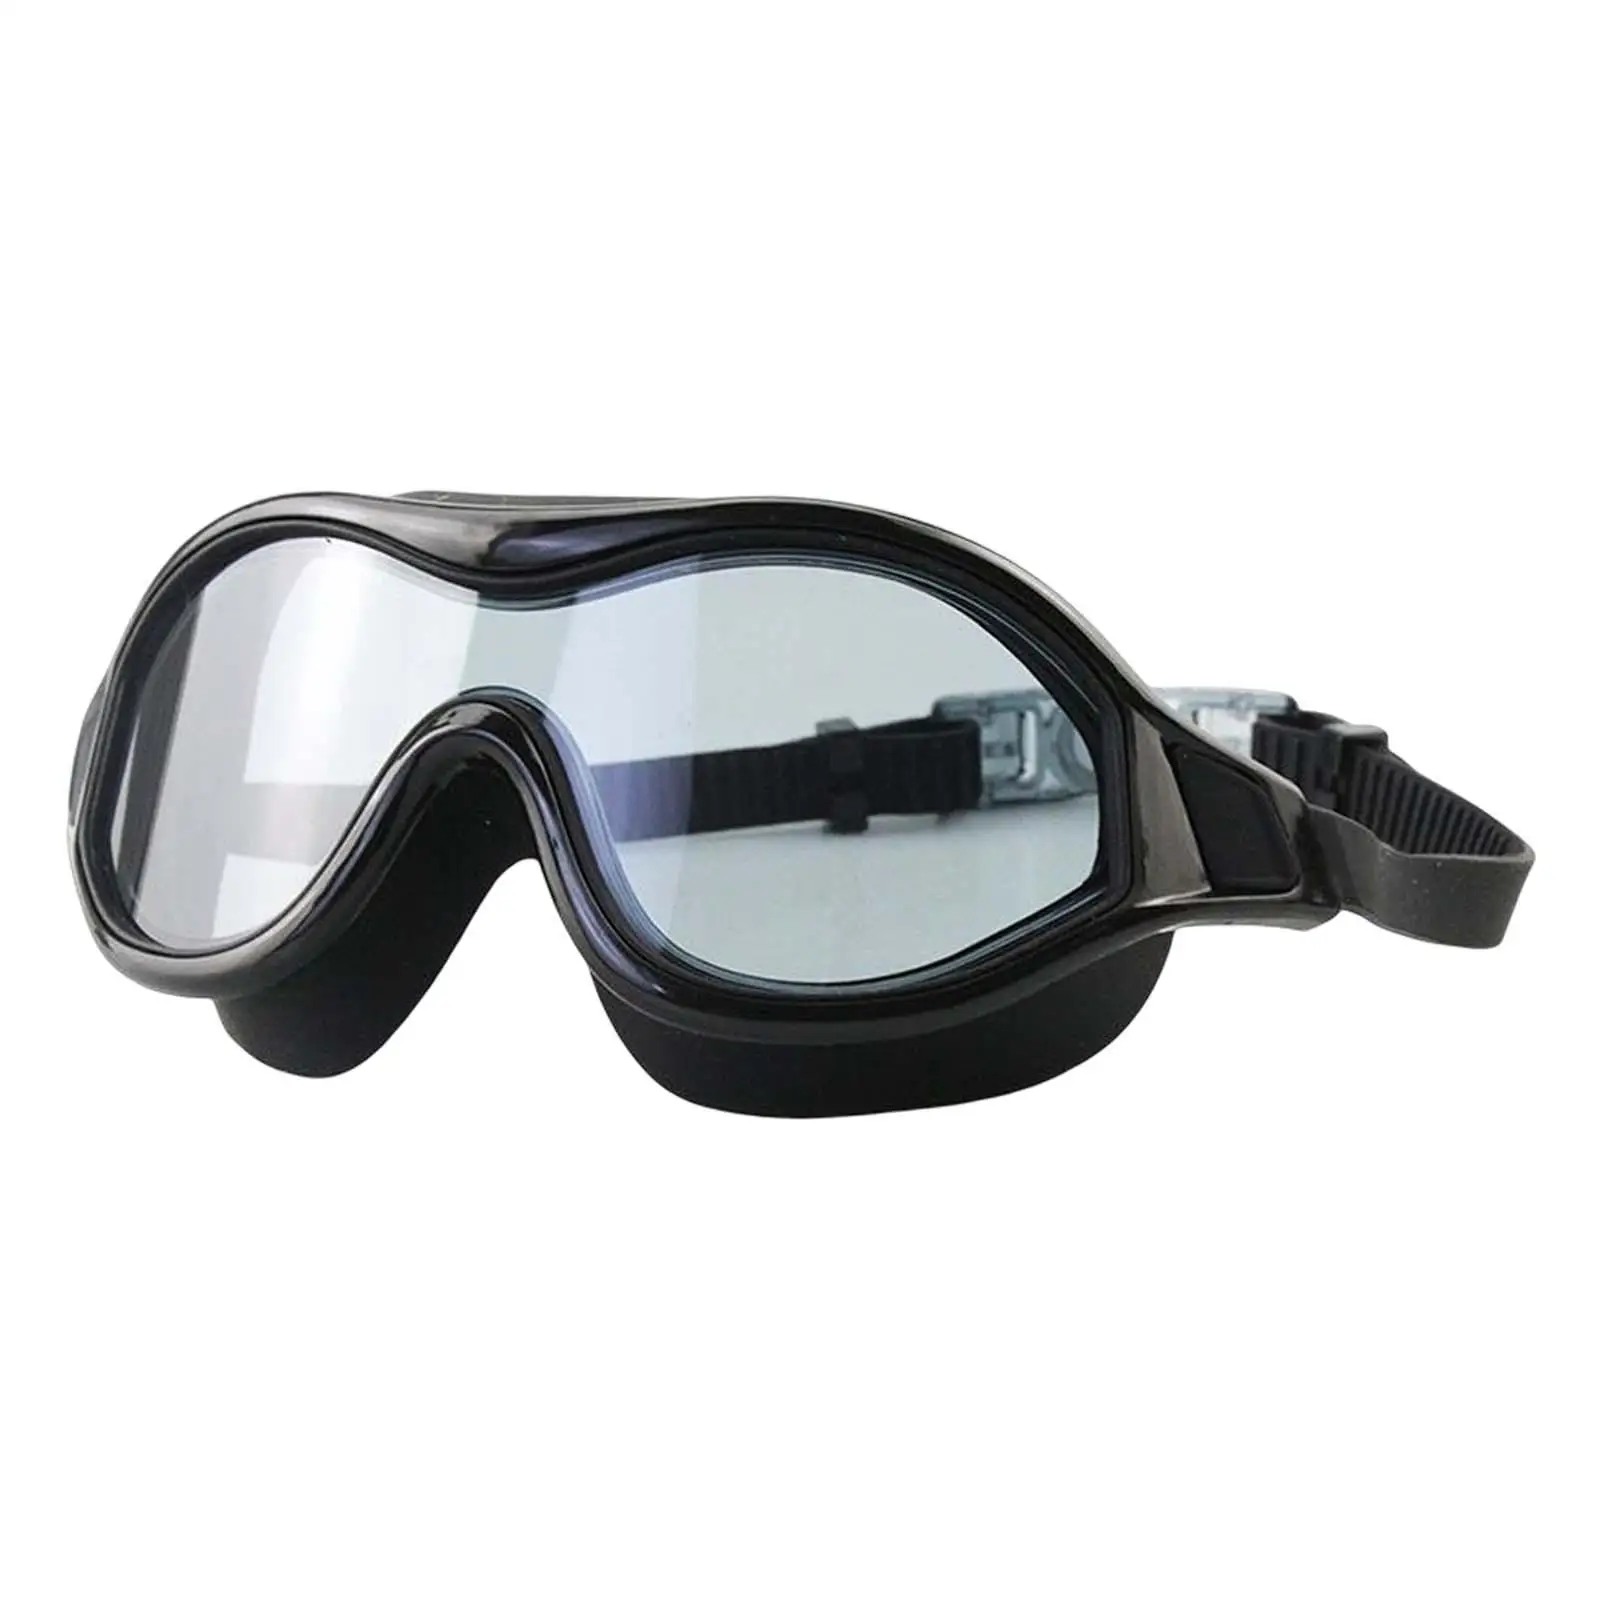 Swim Glasses Anti Fog Adult Swimming Goggles Diving Eyewear Comfortable Adjustable Professional Unisex for Men Outdoor Indoor